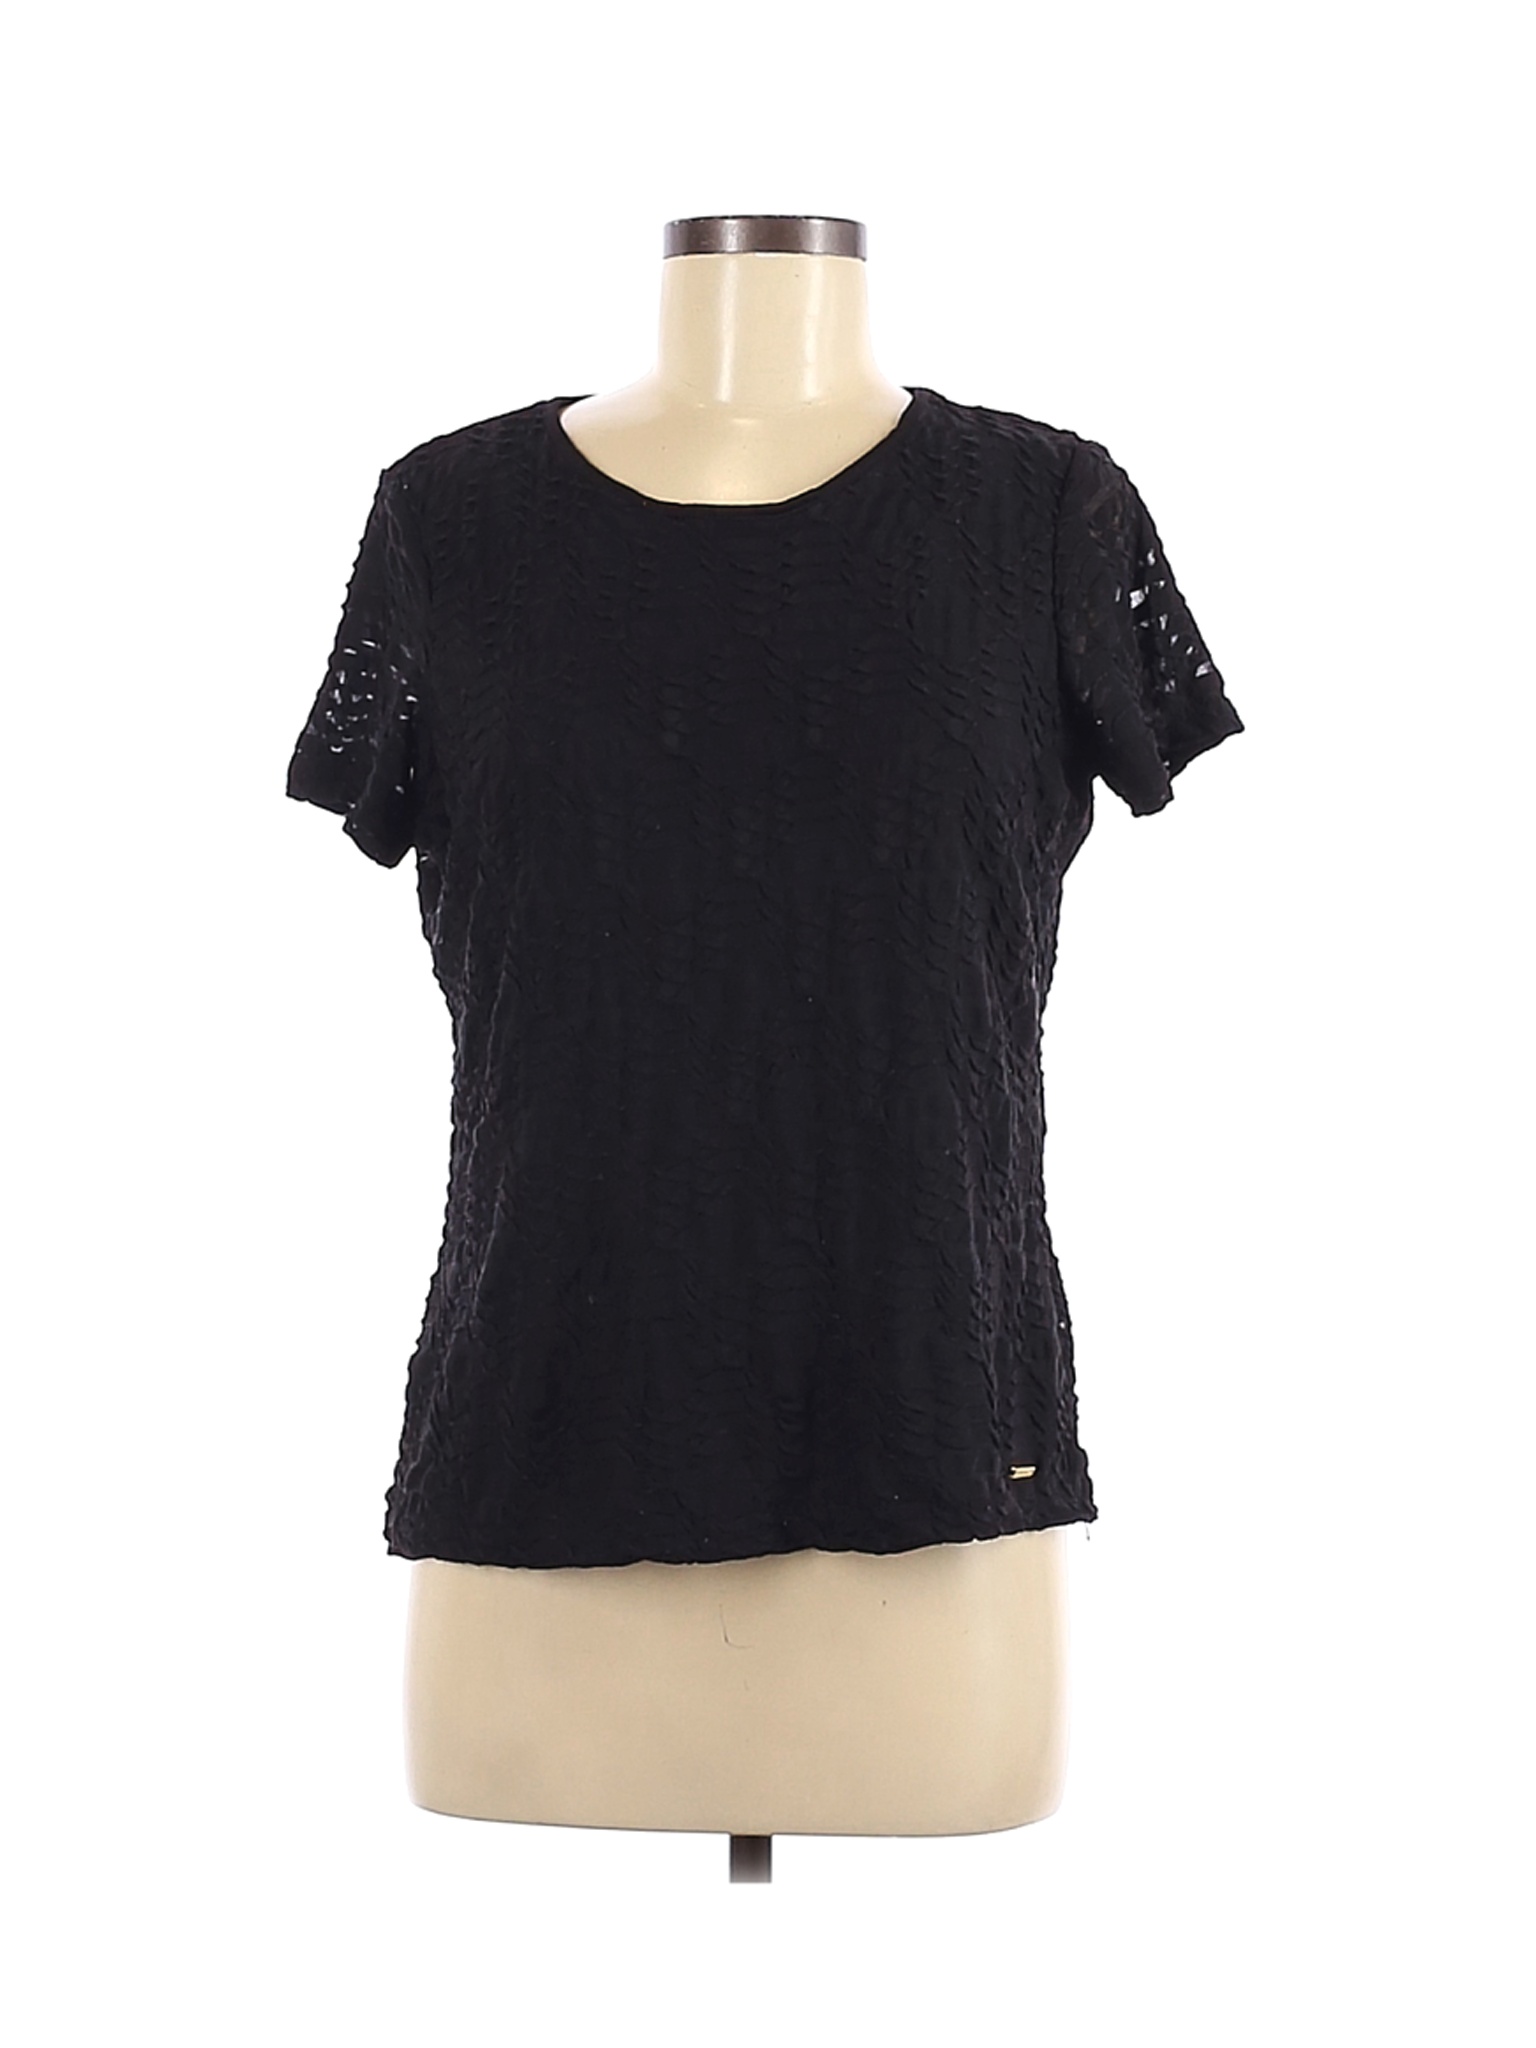 Calvin Klein Women Black Short Sleeve Top M | eBay